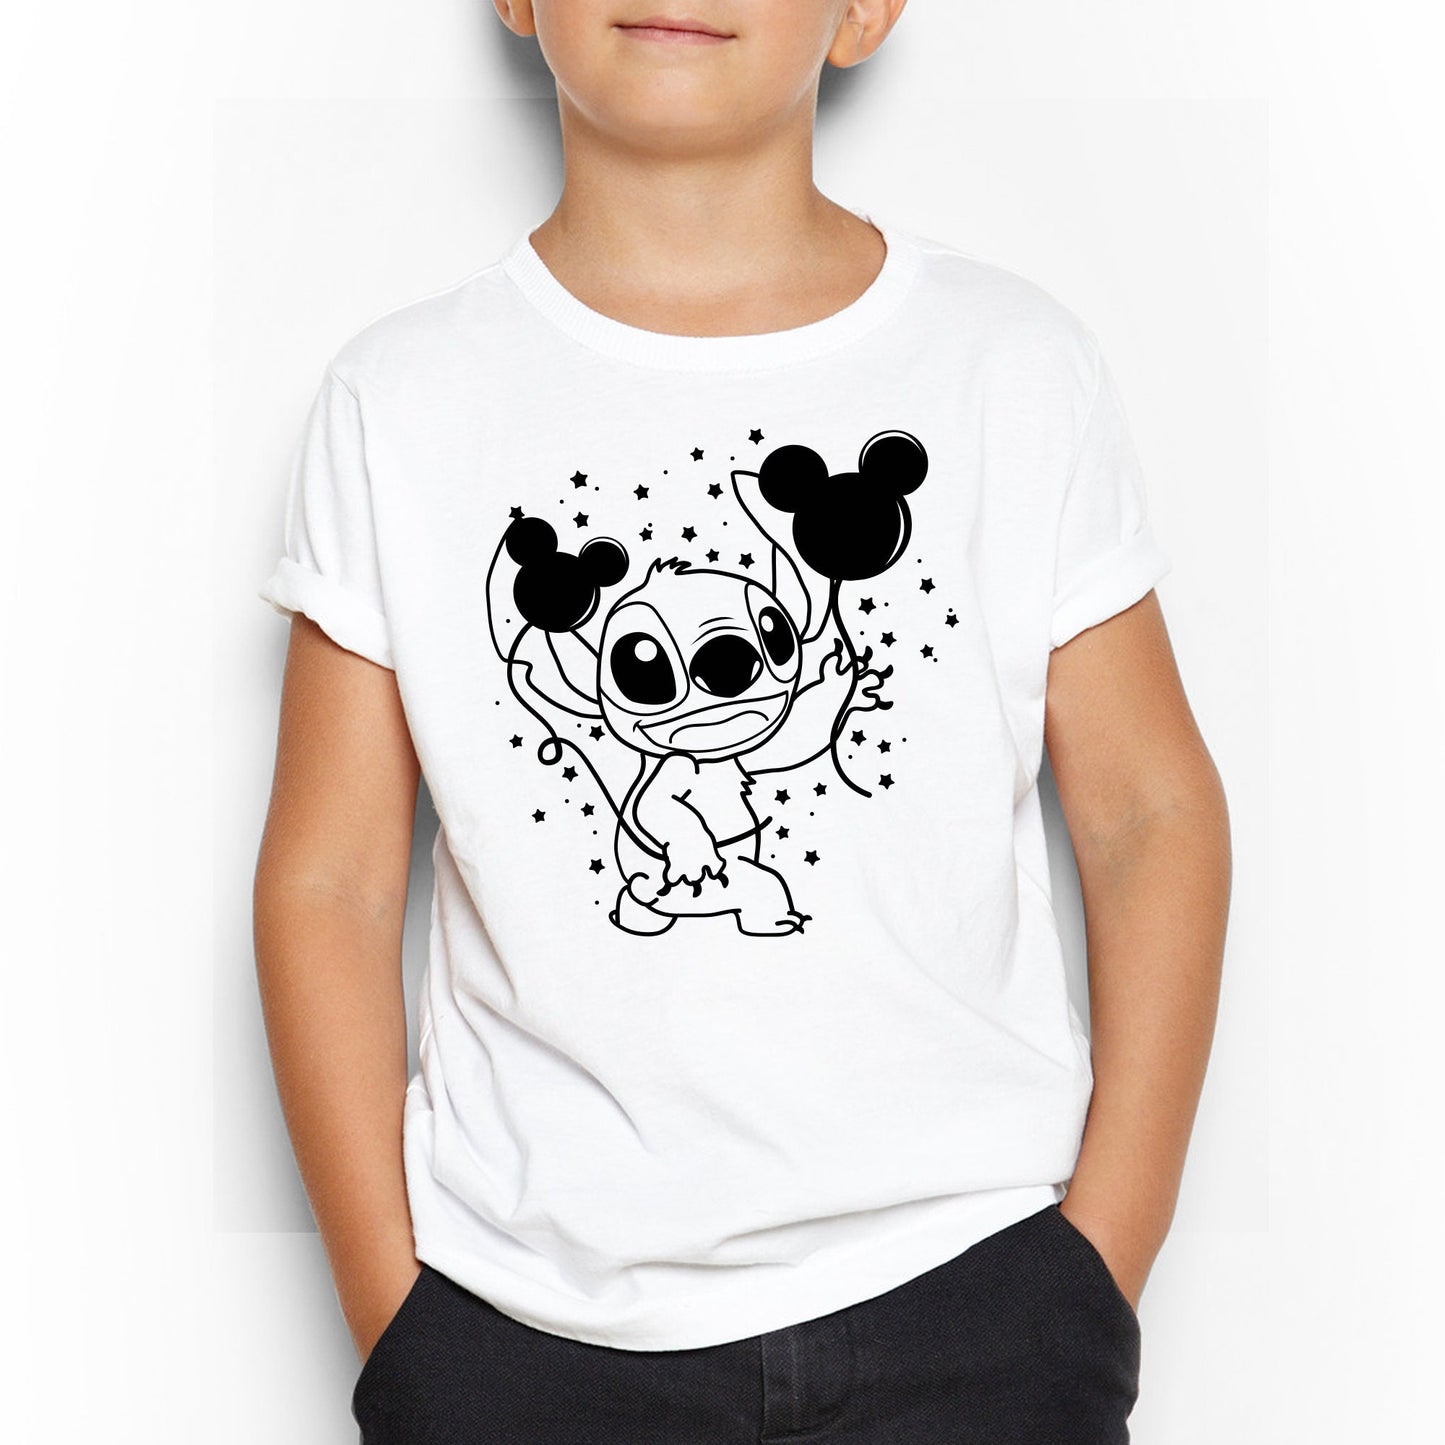 Lilo and Stitch Shirt, Kids Disney Shirt, Disney Vacation Shirt, Disney World Shirt, Custom Kids Shirts